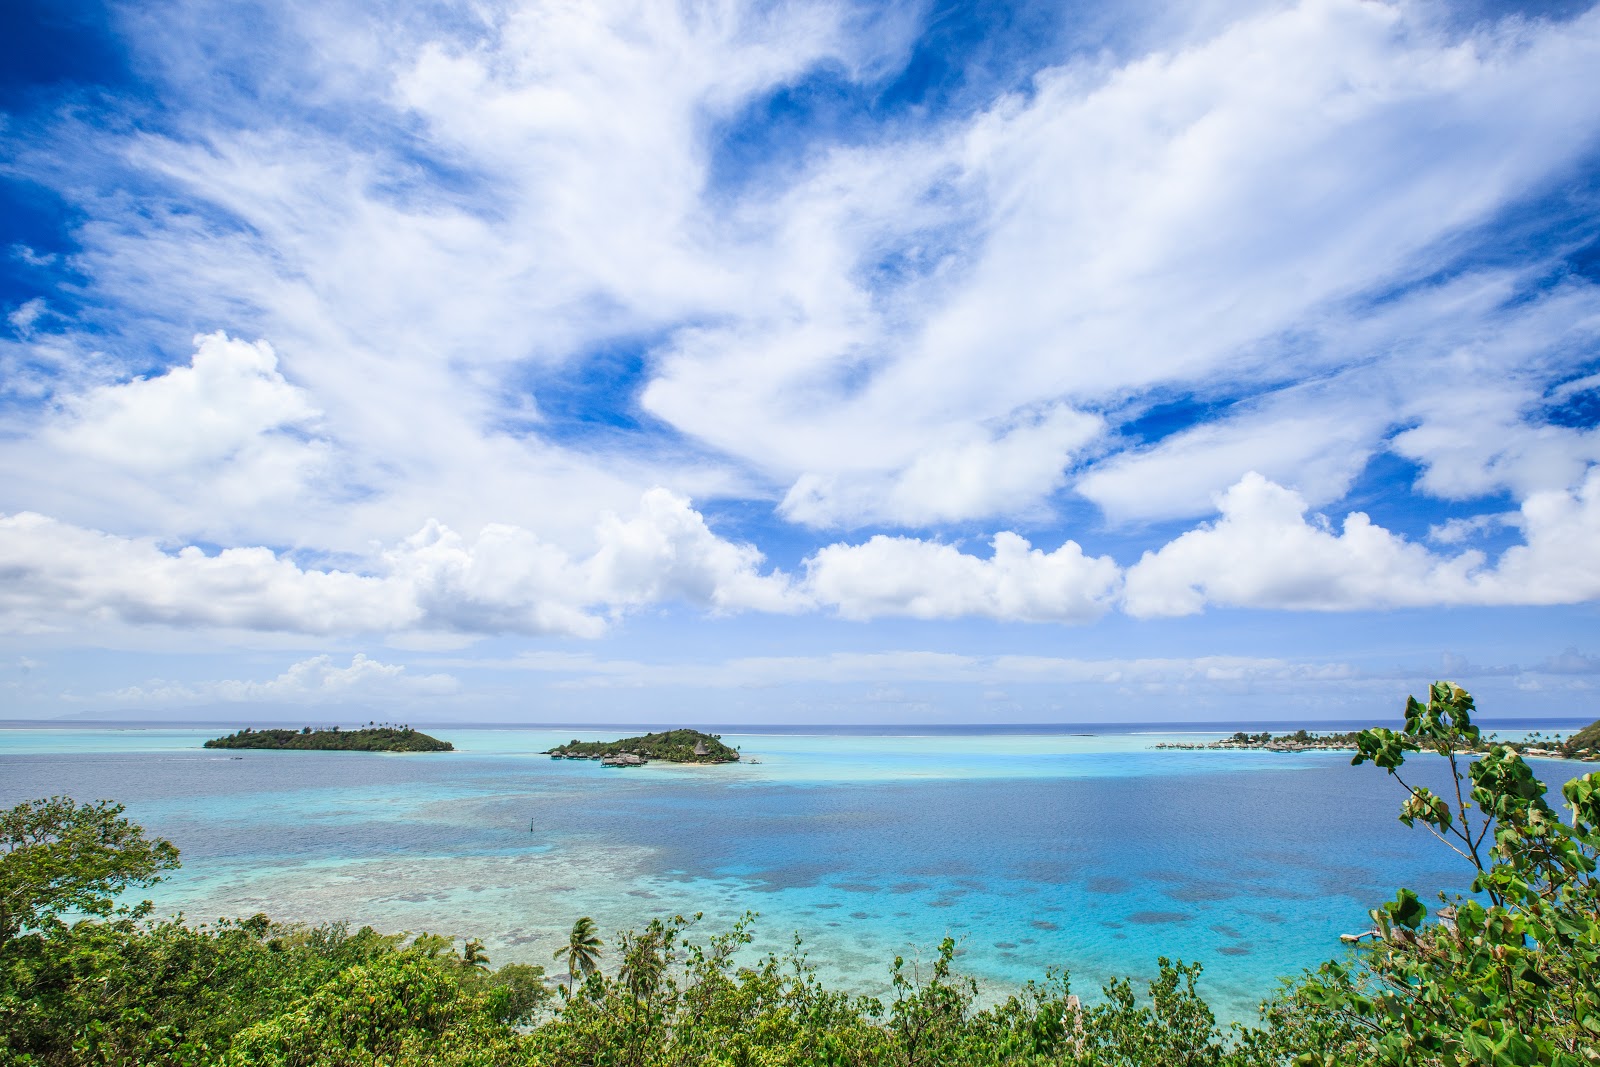 Bora Bora 本島觀景台之二